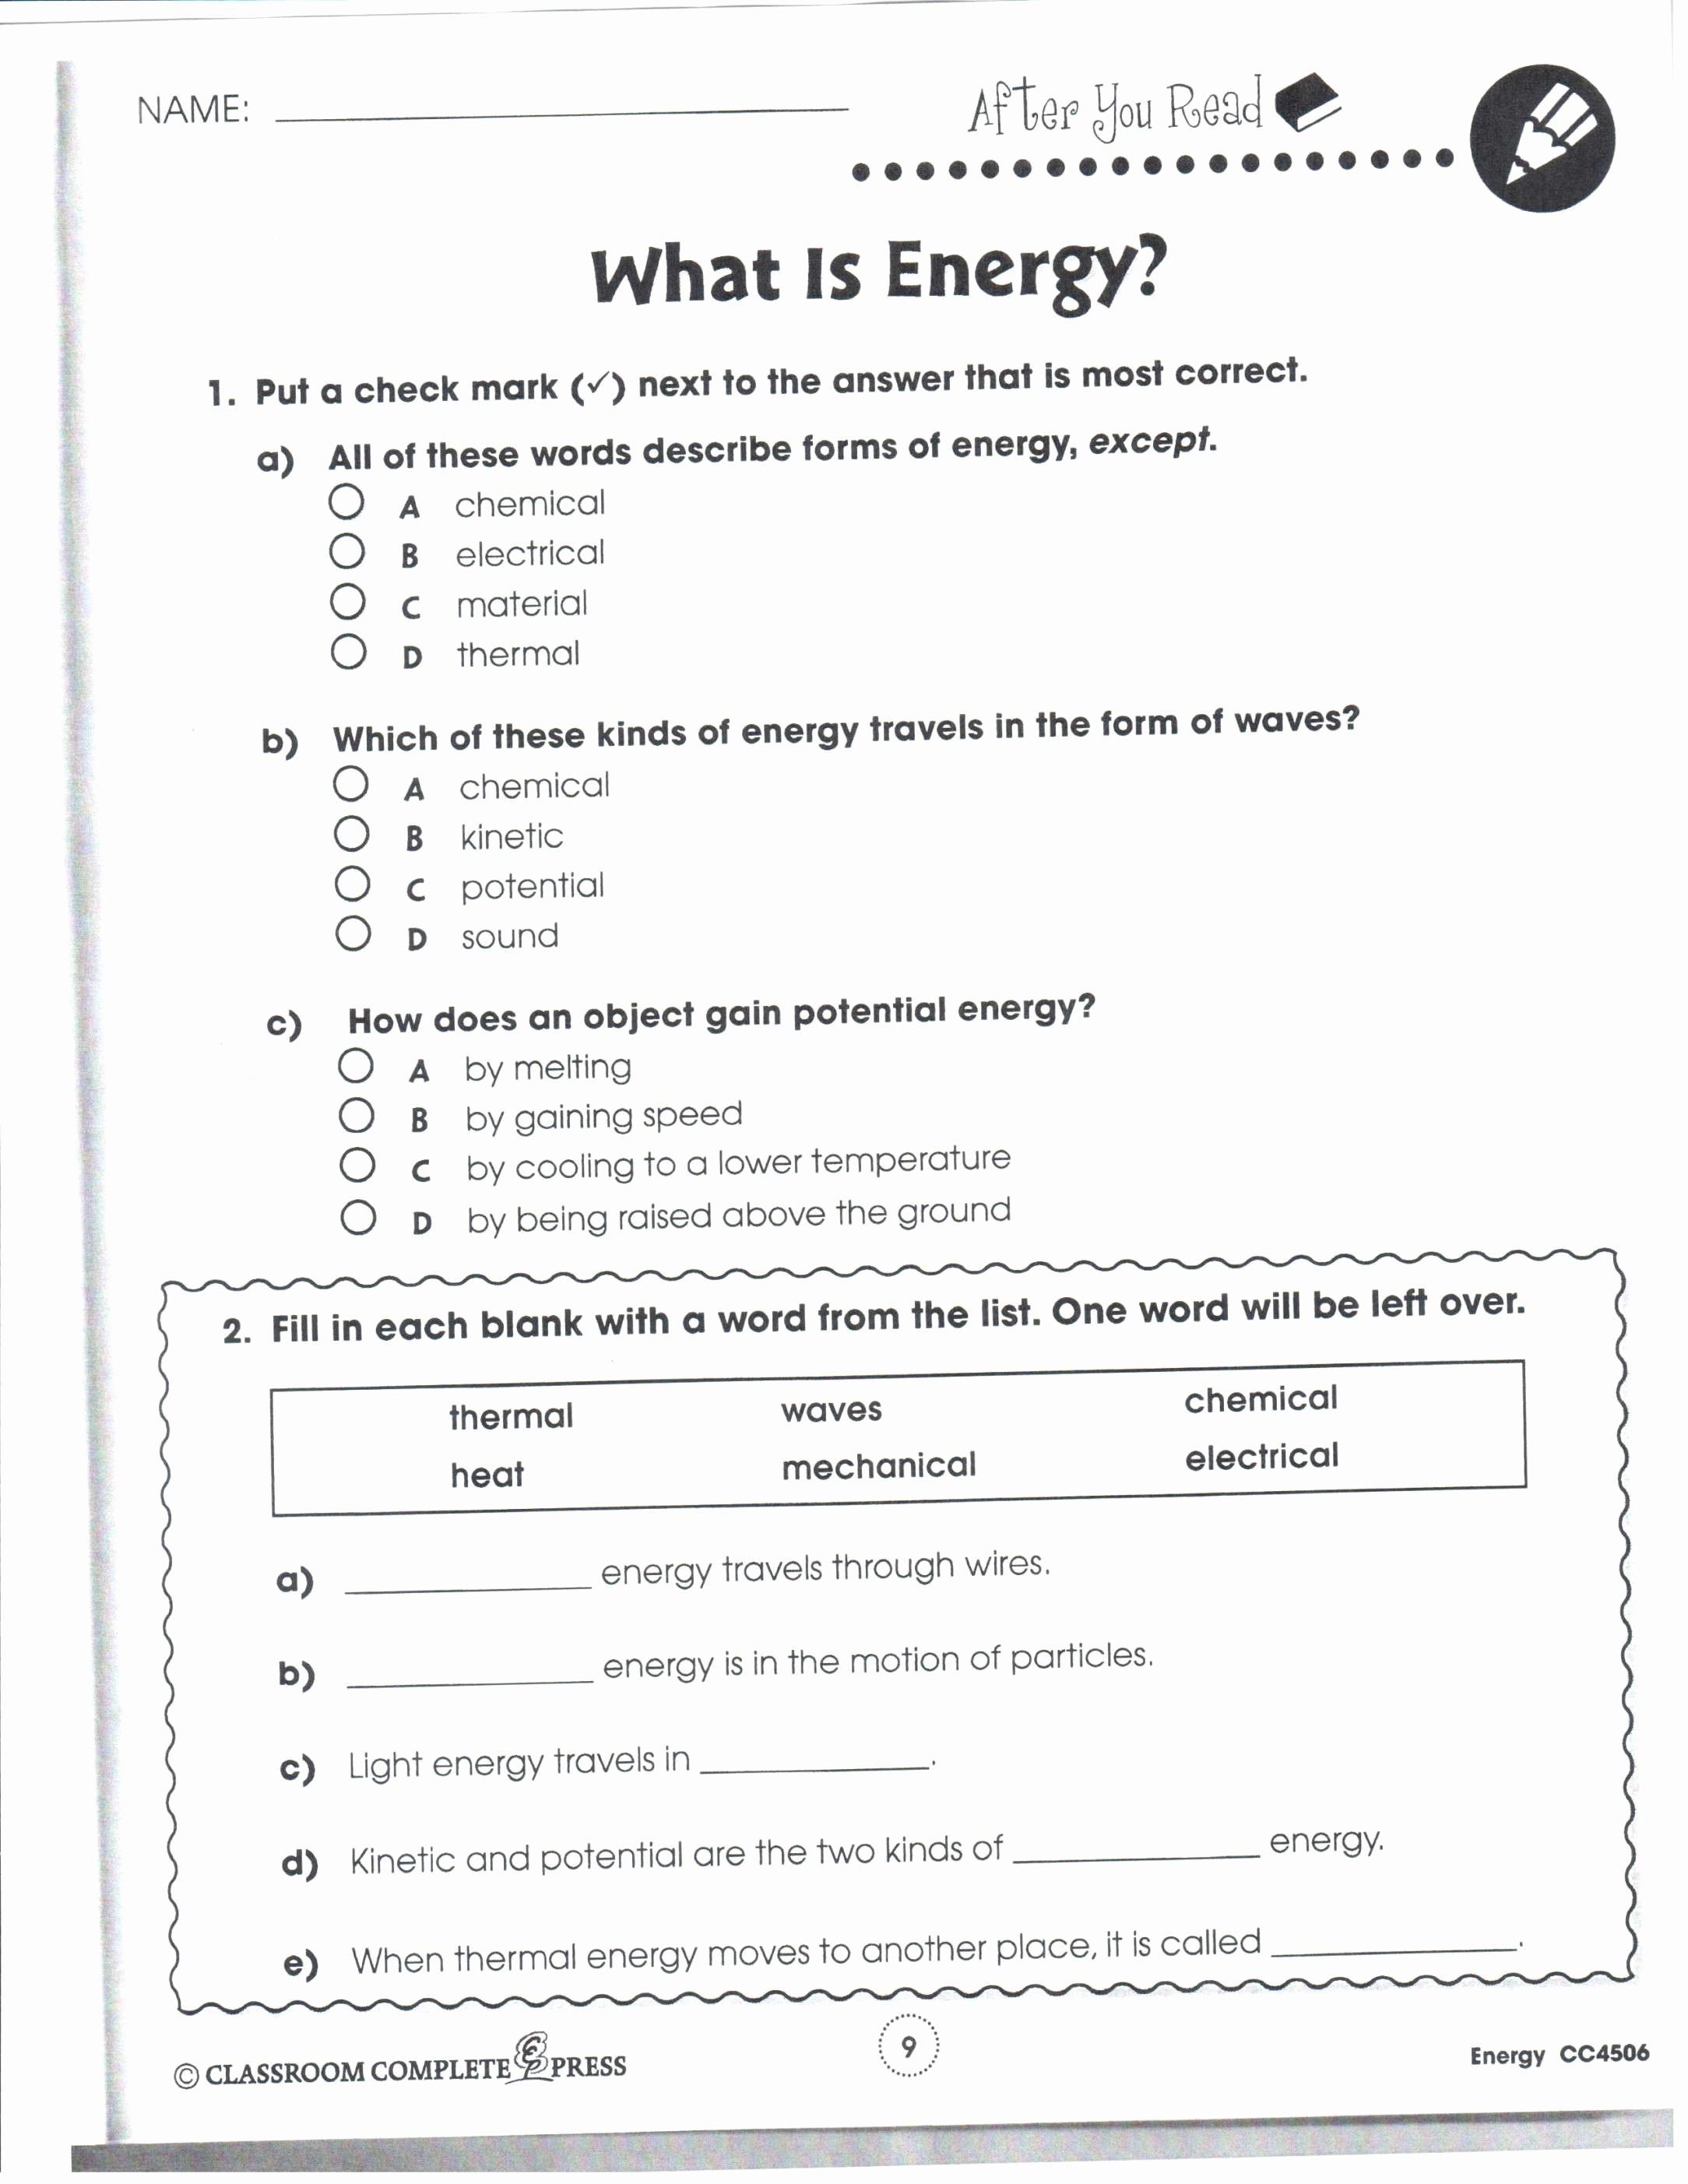 Work and Energy Worksheet Answers Elegant Work Energy and Power Worksheet Answers Physics Classroom